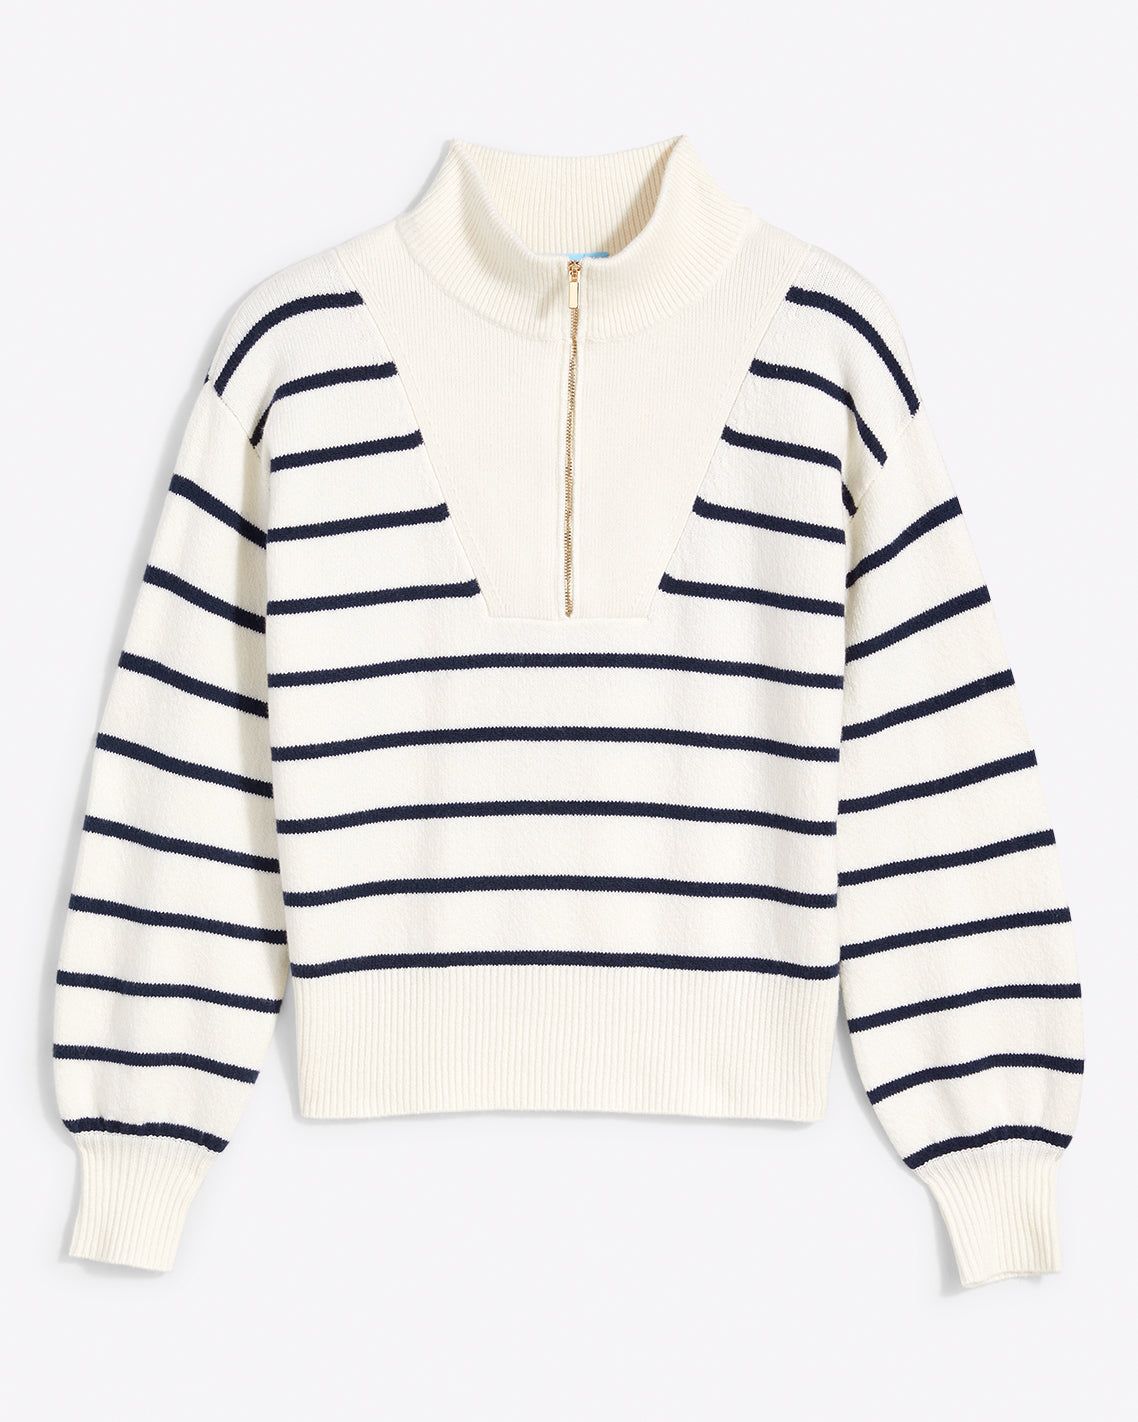 Striped Quarter Zip Sweater in Mariner Stripe | Draper James (US)